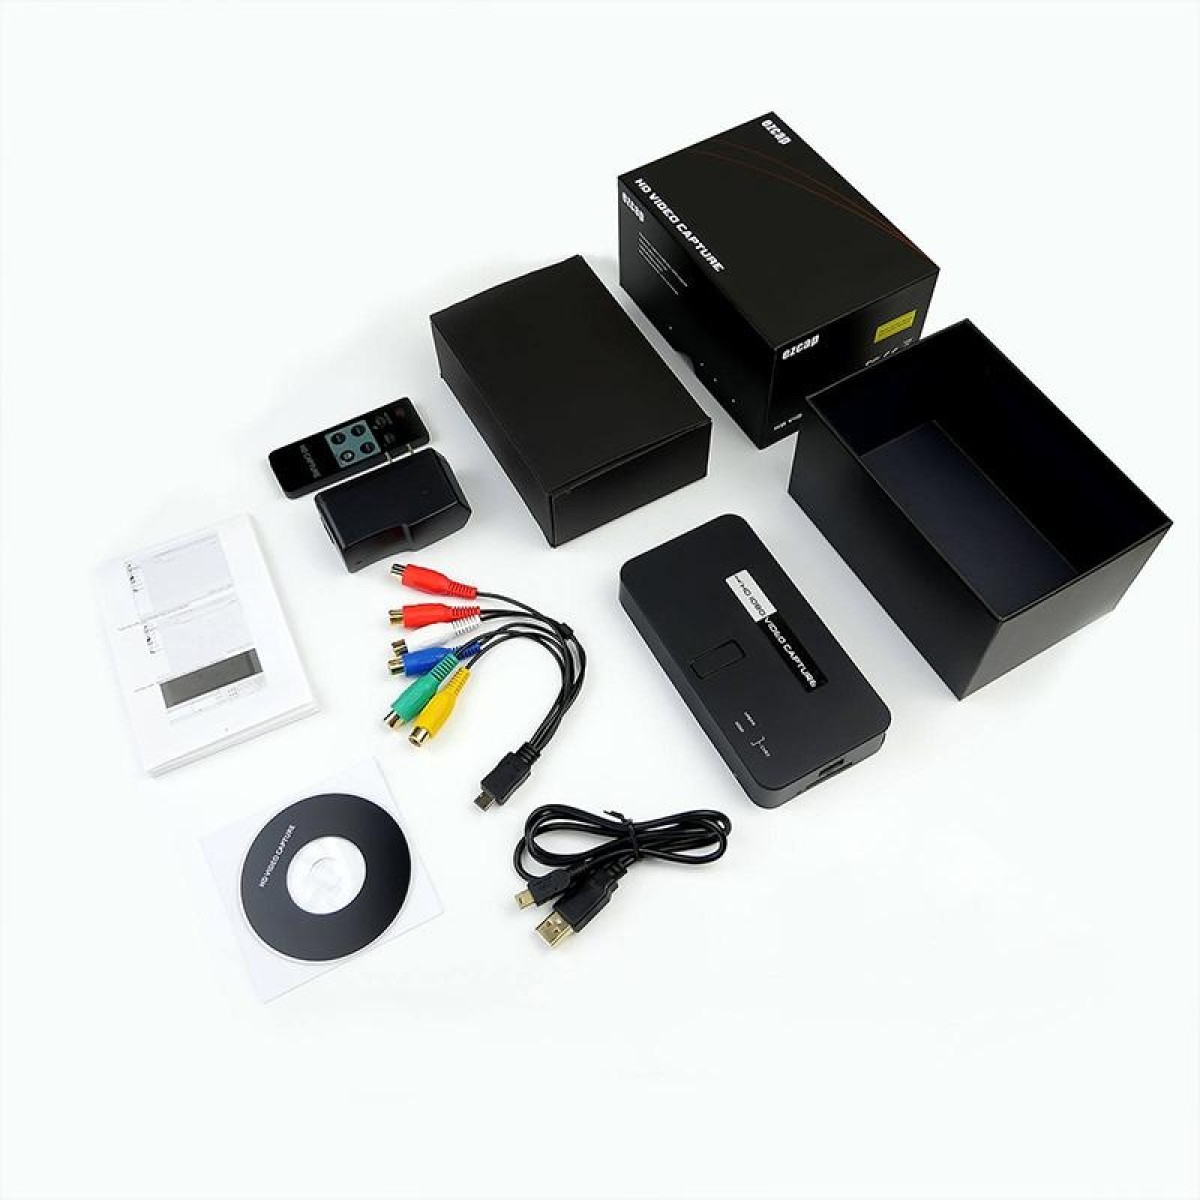 Ezcap 284 HDMI/AV/Ypbpr Video Capture Recording Box Game Capture Card